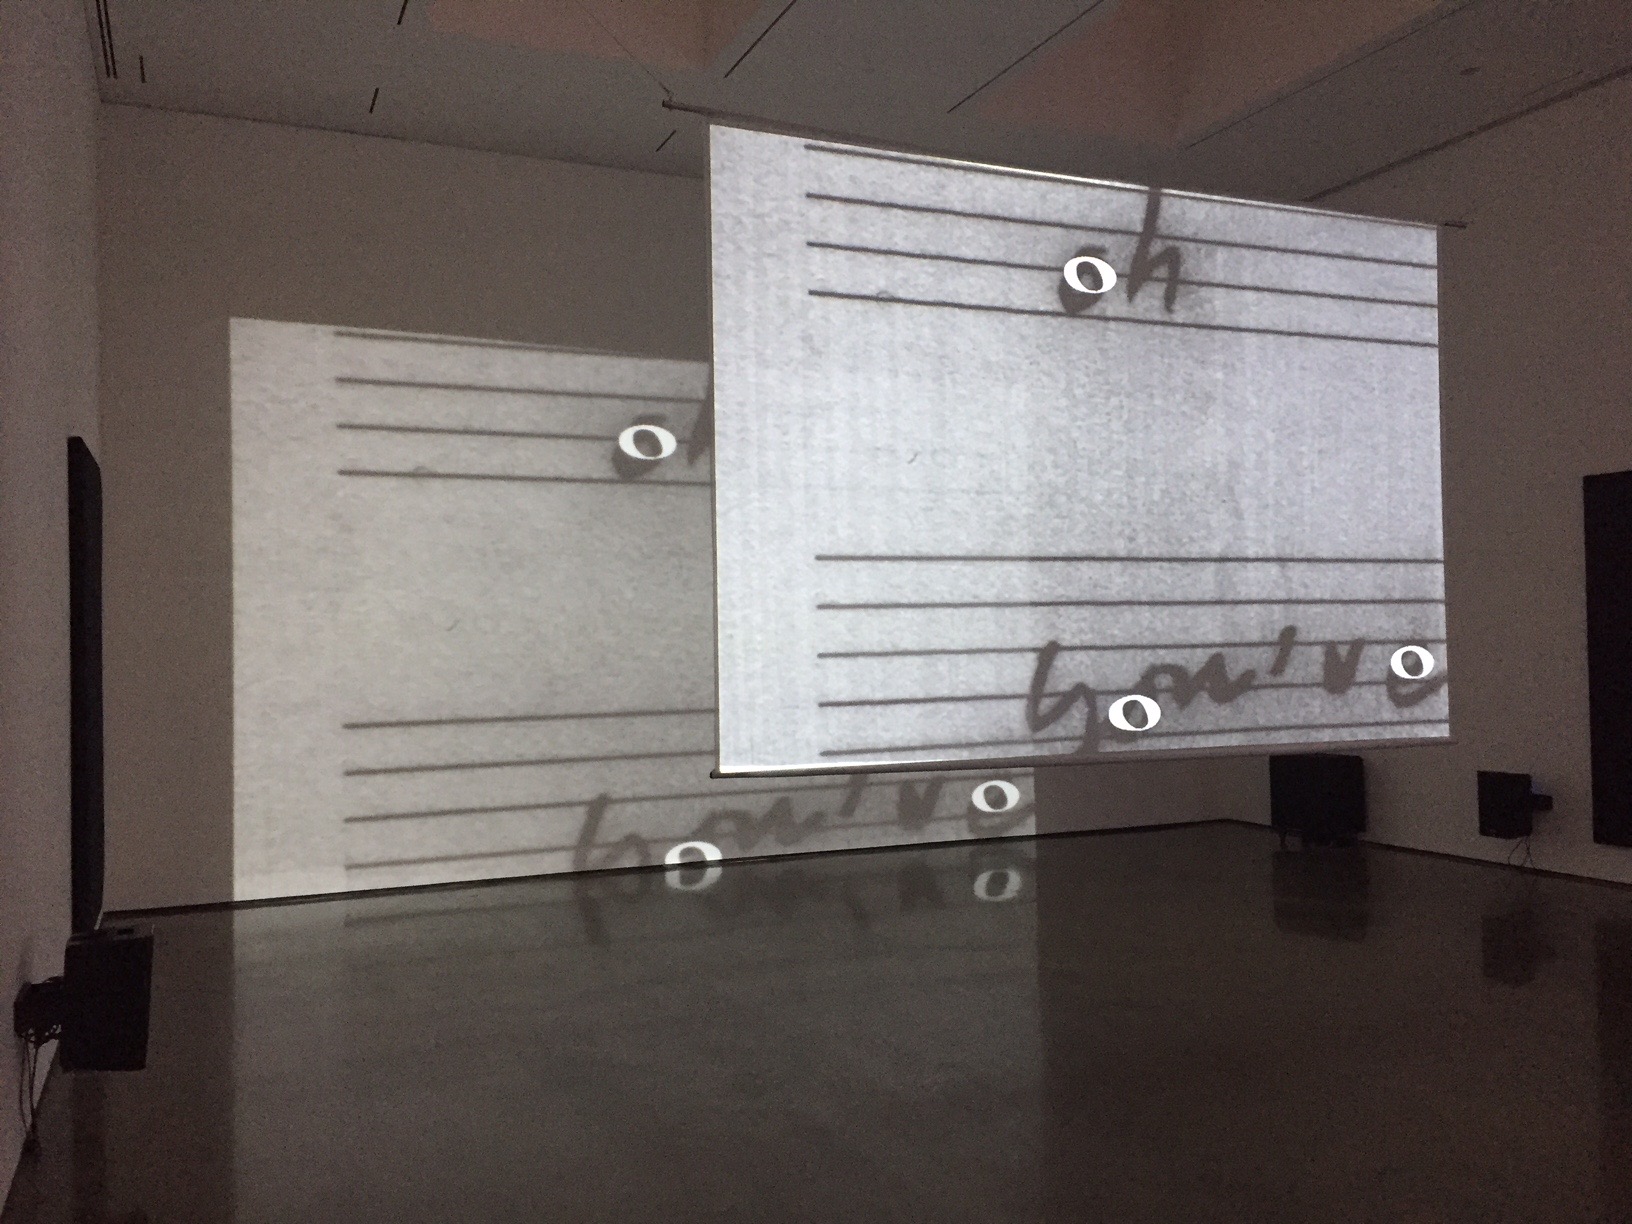 View of installation at Bard CCS exhibition "Marina Rosenfeld: After Notation", 2017